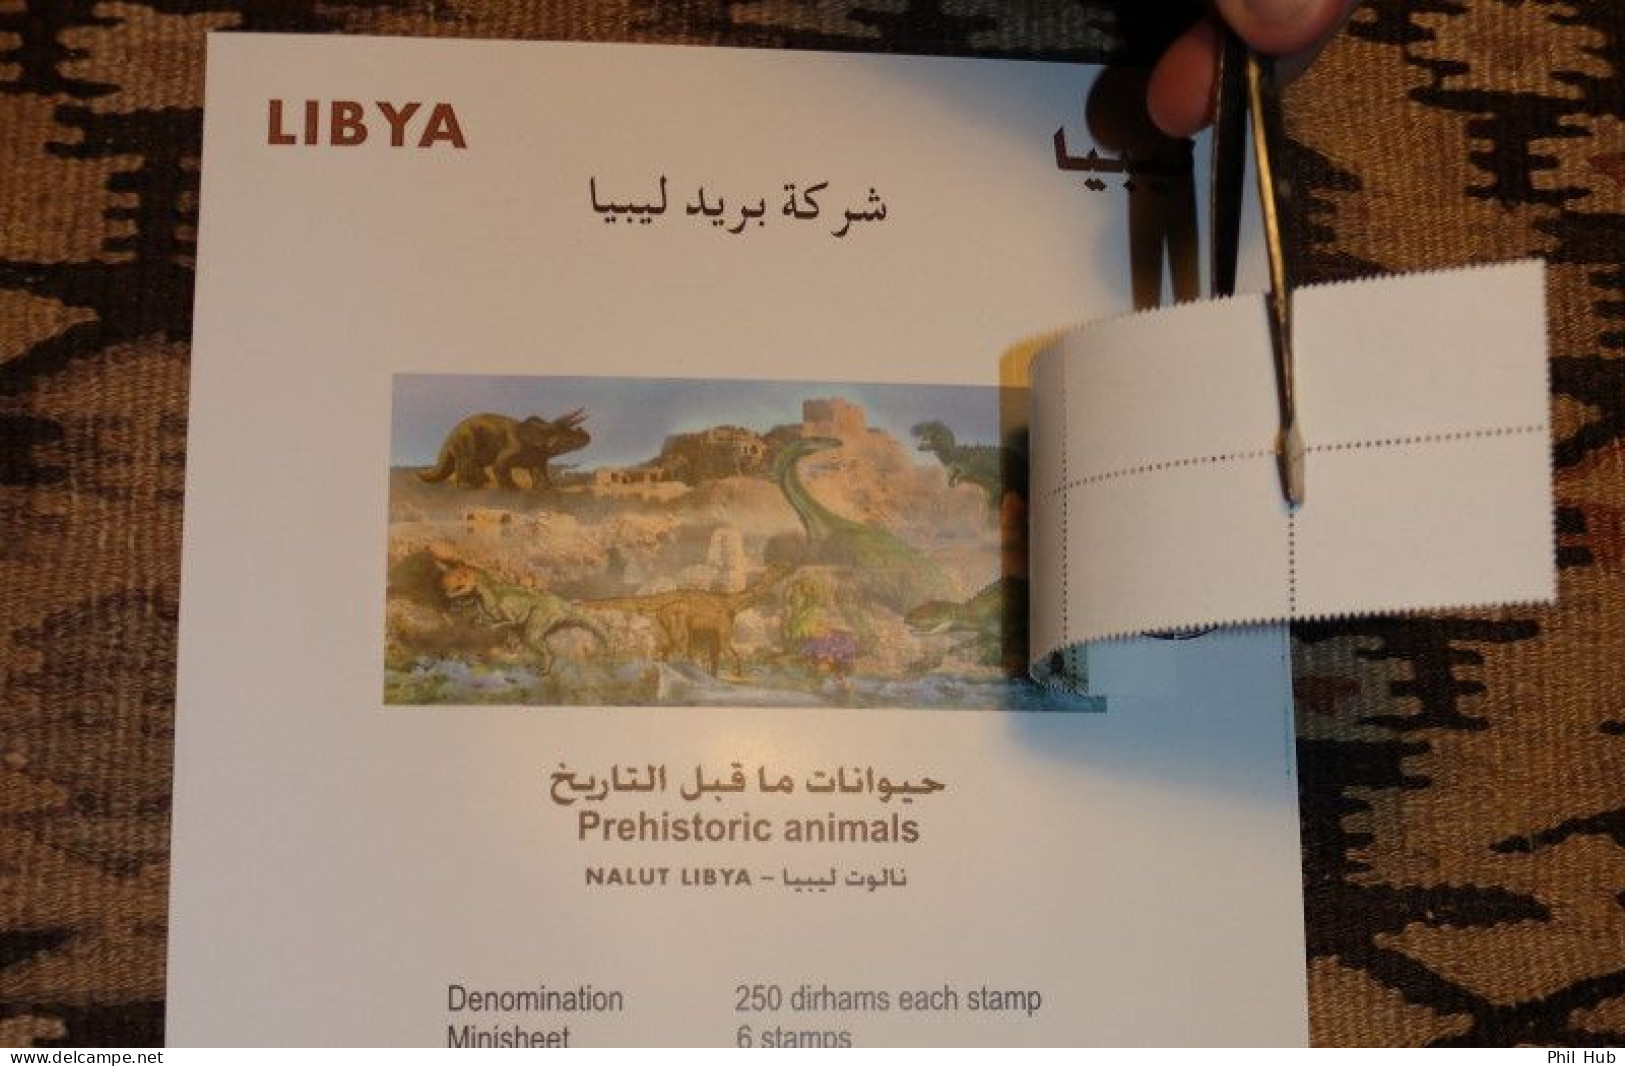 LIBYA 2013 Dinosaurs (Libya Post INFO-SHEET With Stamps PMK + Artist's Signature) SUPPLIED UNFOLDED - Prehistorics